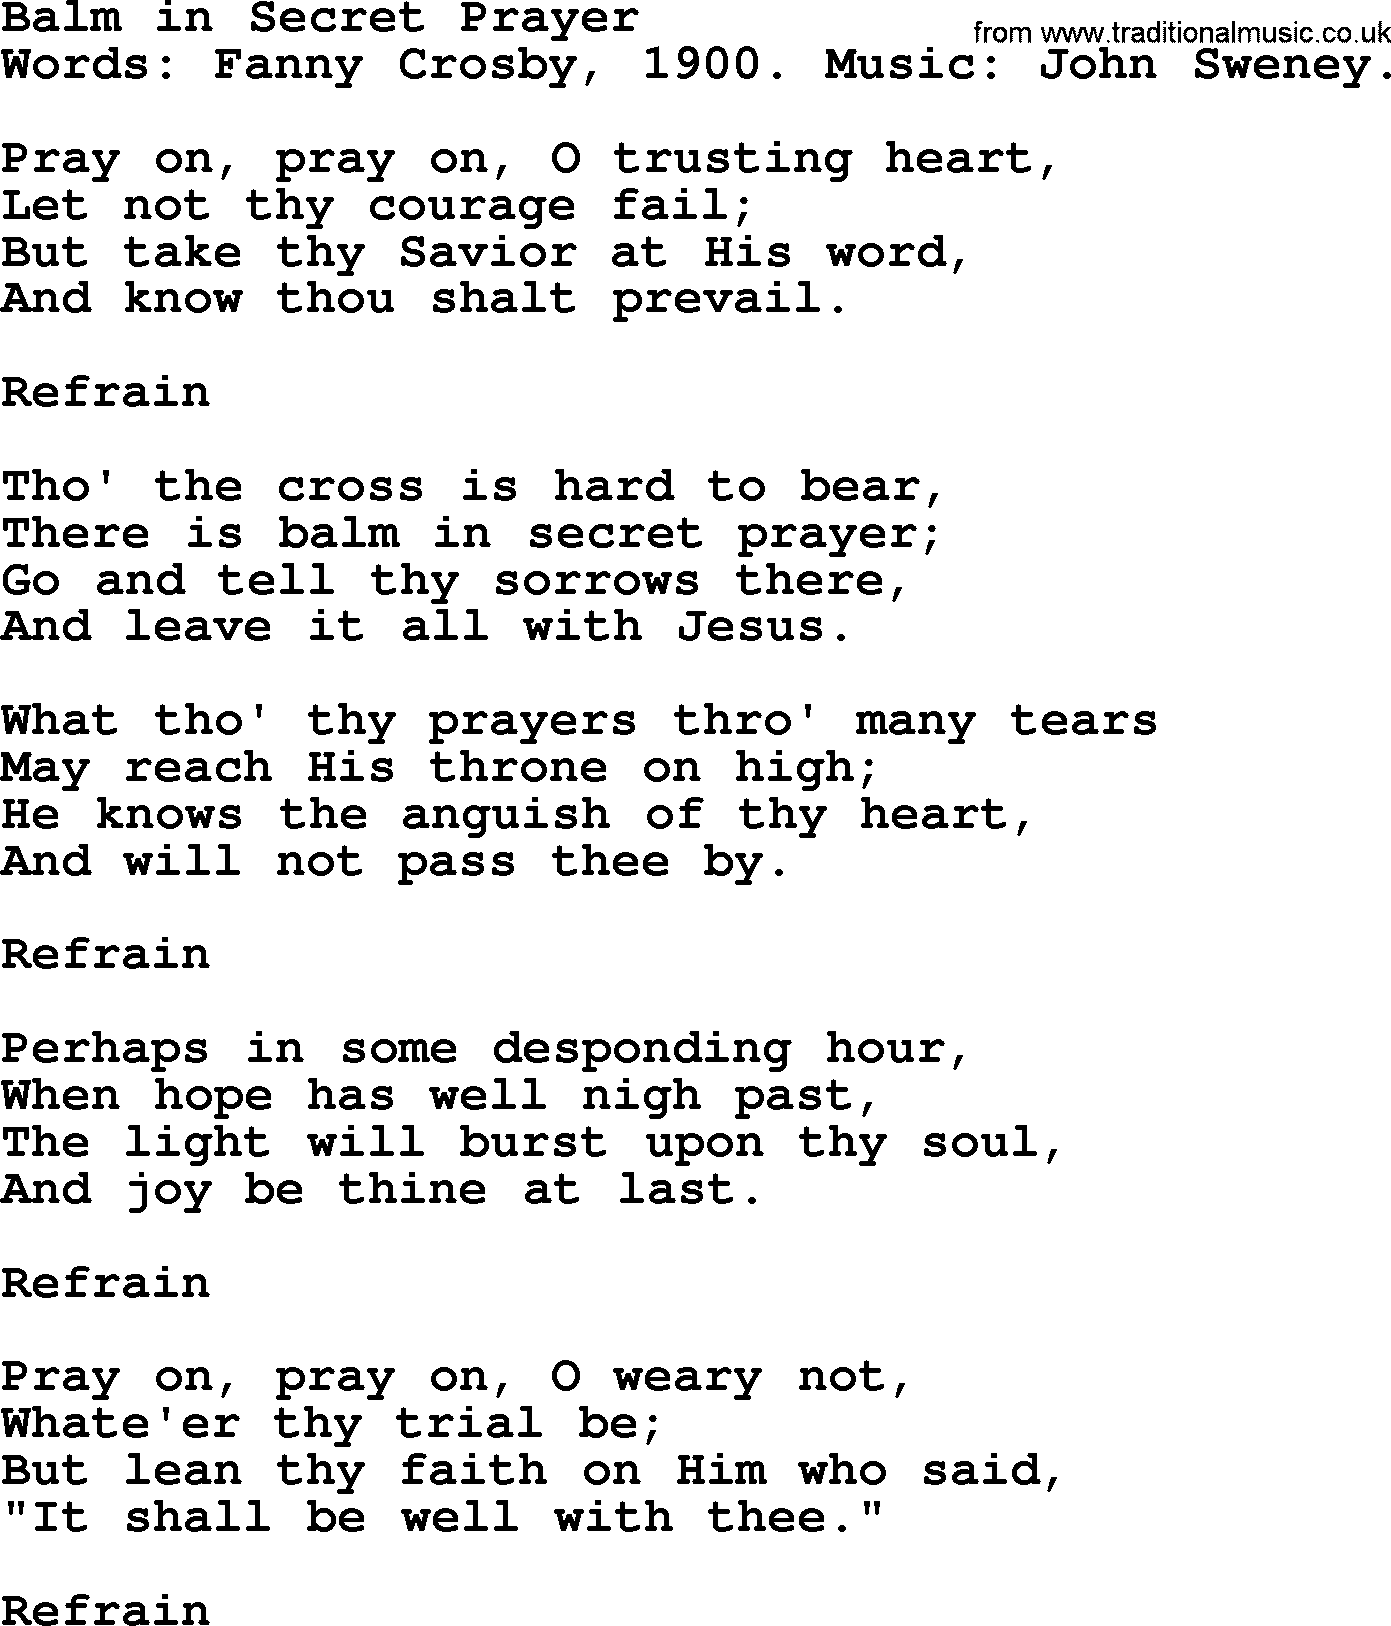 Fanny Crosby song: Balm In Secret Prayer, lyrics